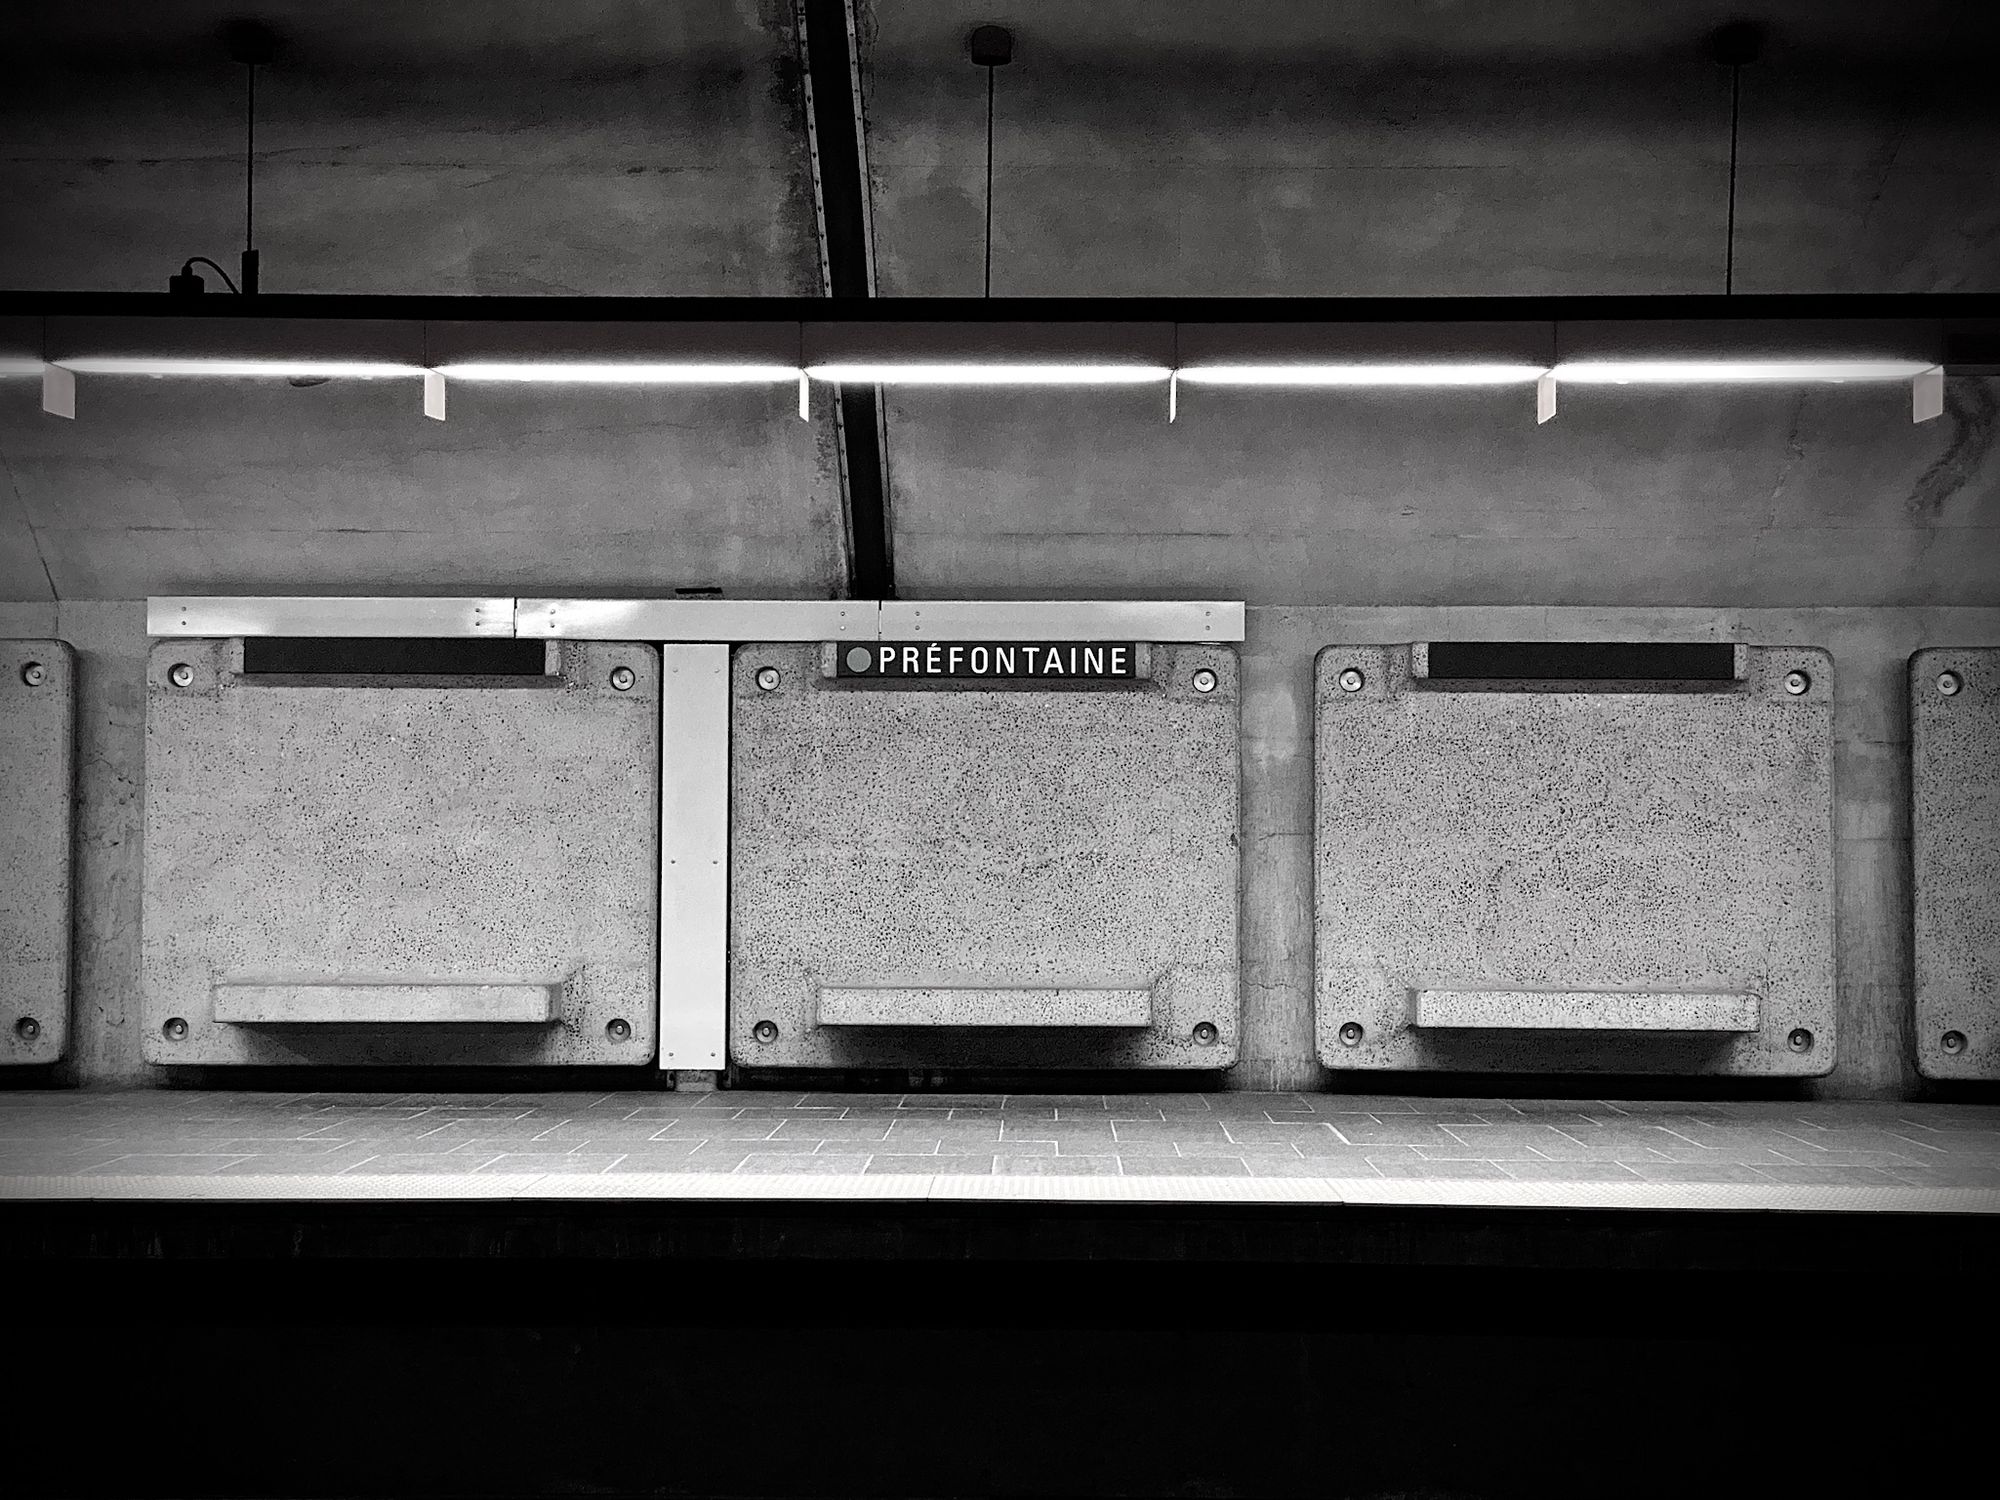 Montreal Metro Station